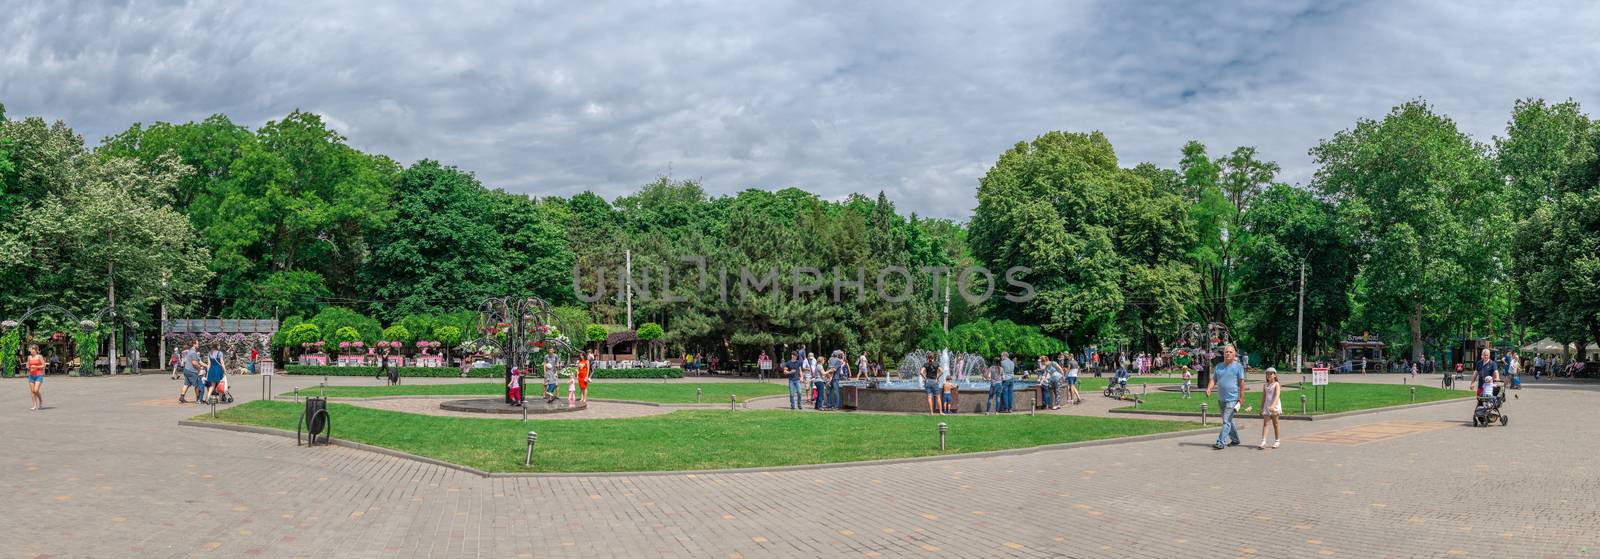 Fountains in Gorky Park in Odessa, Ukraine by Multipedia